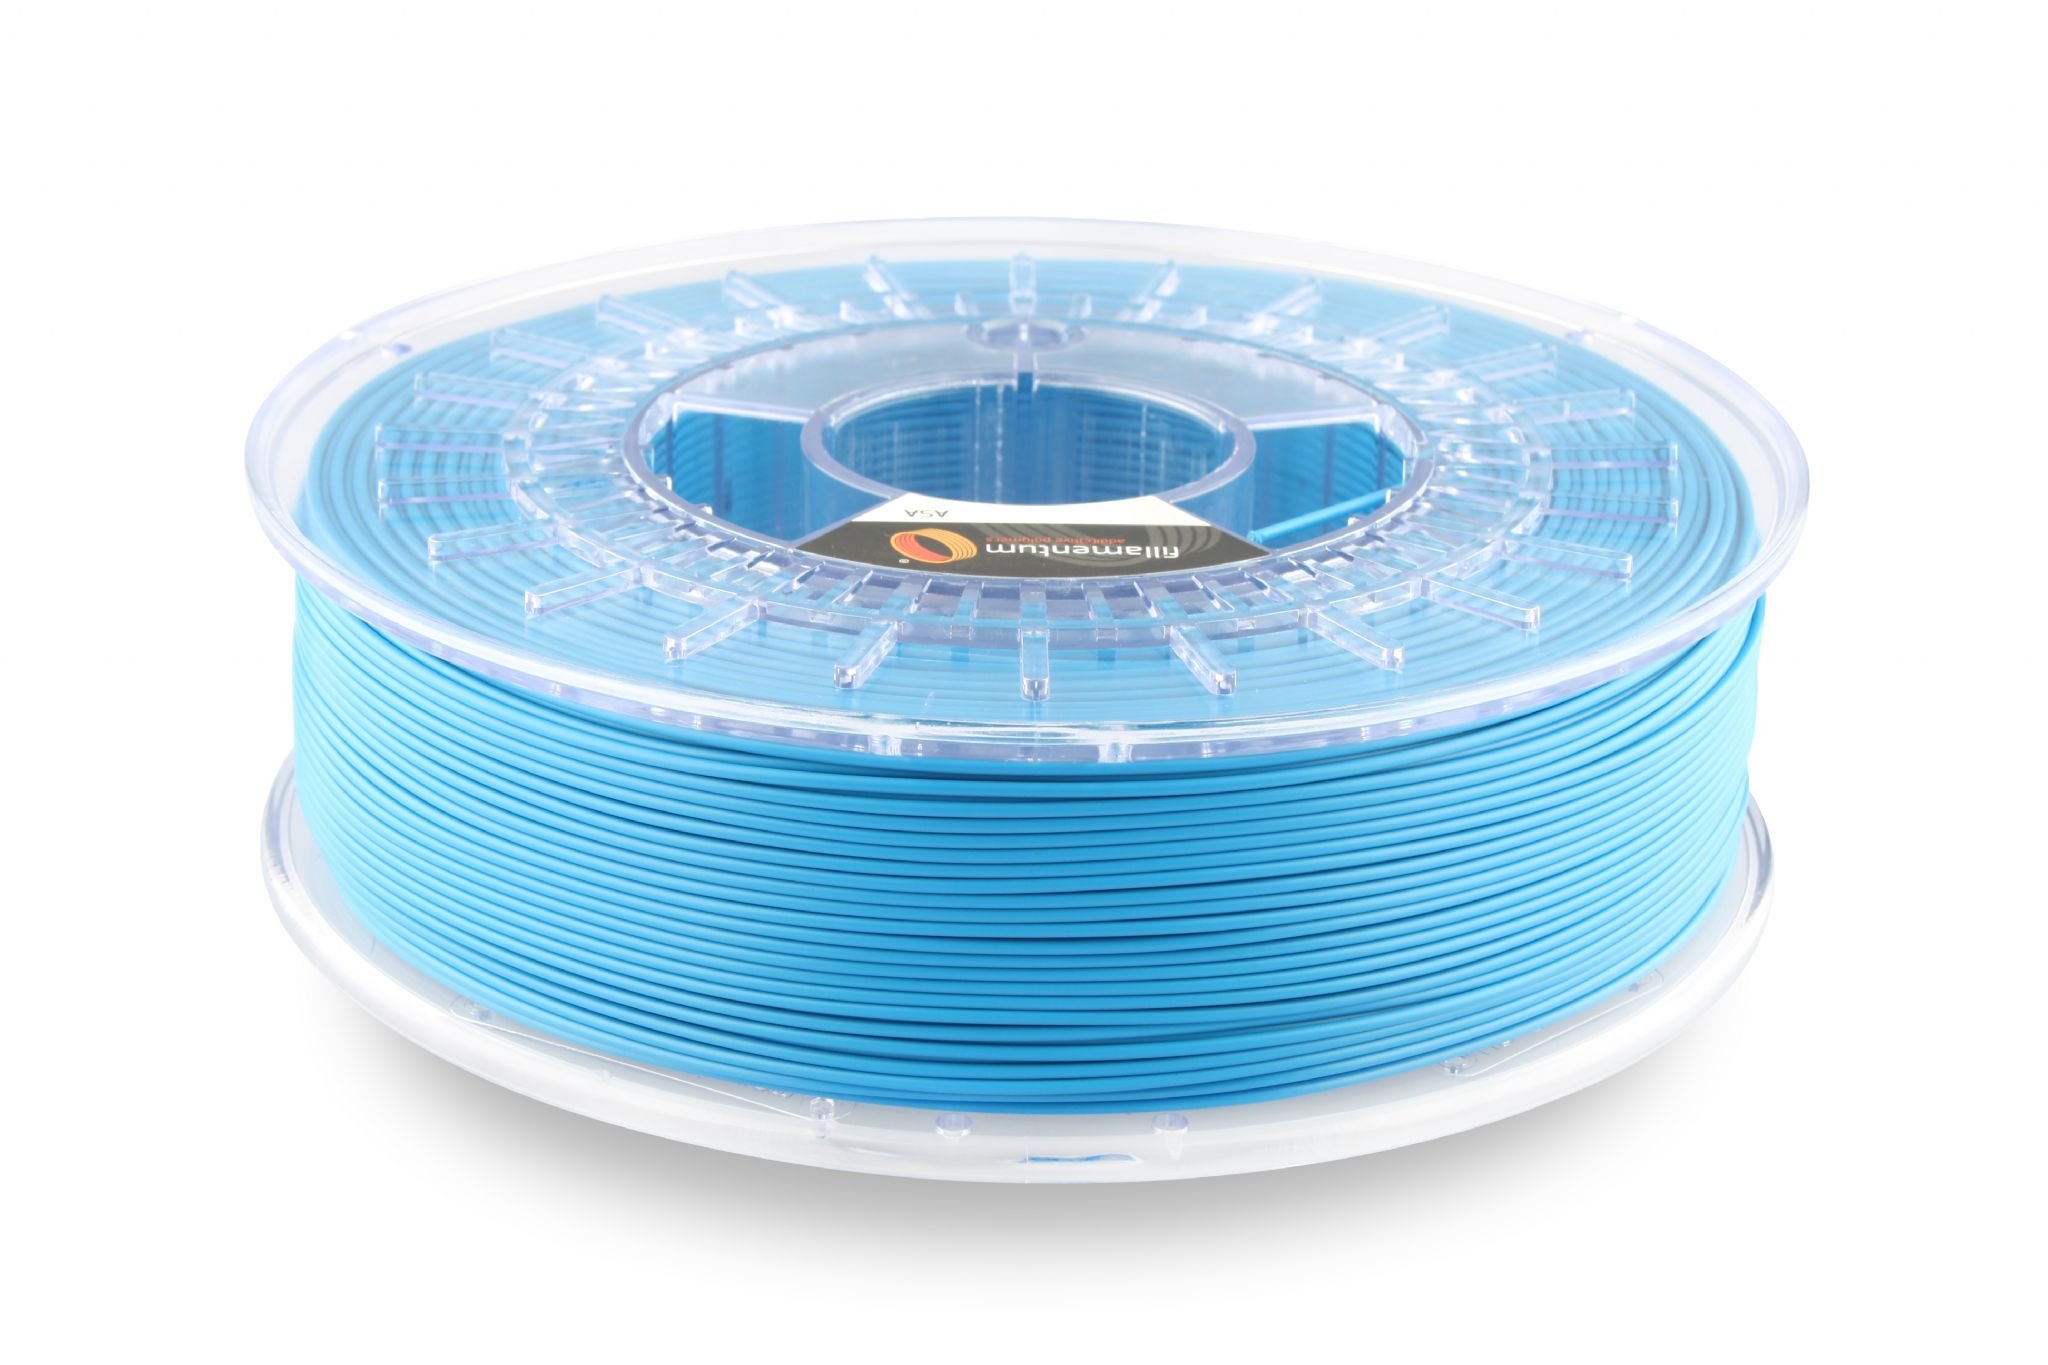  A sample spool of ASA 3D printer filament from Filamentum 